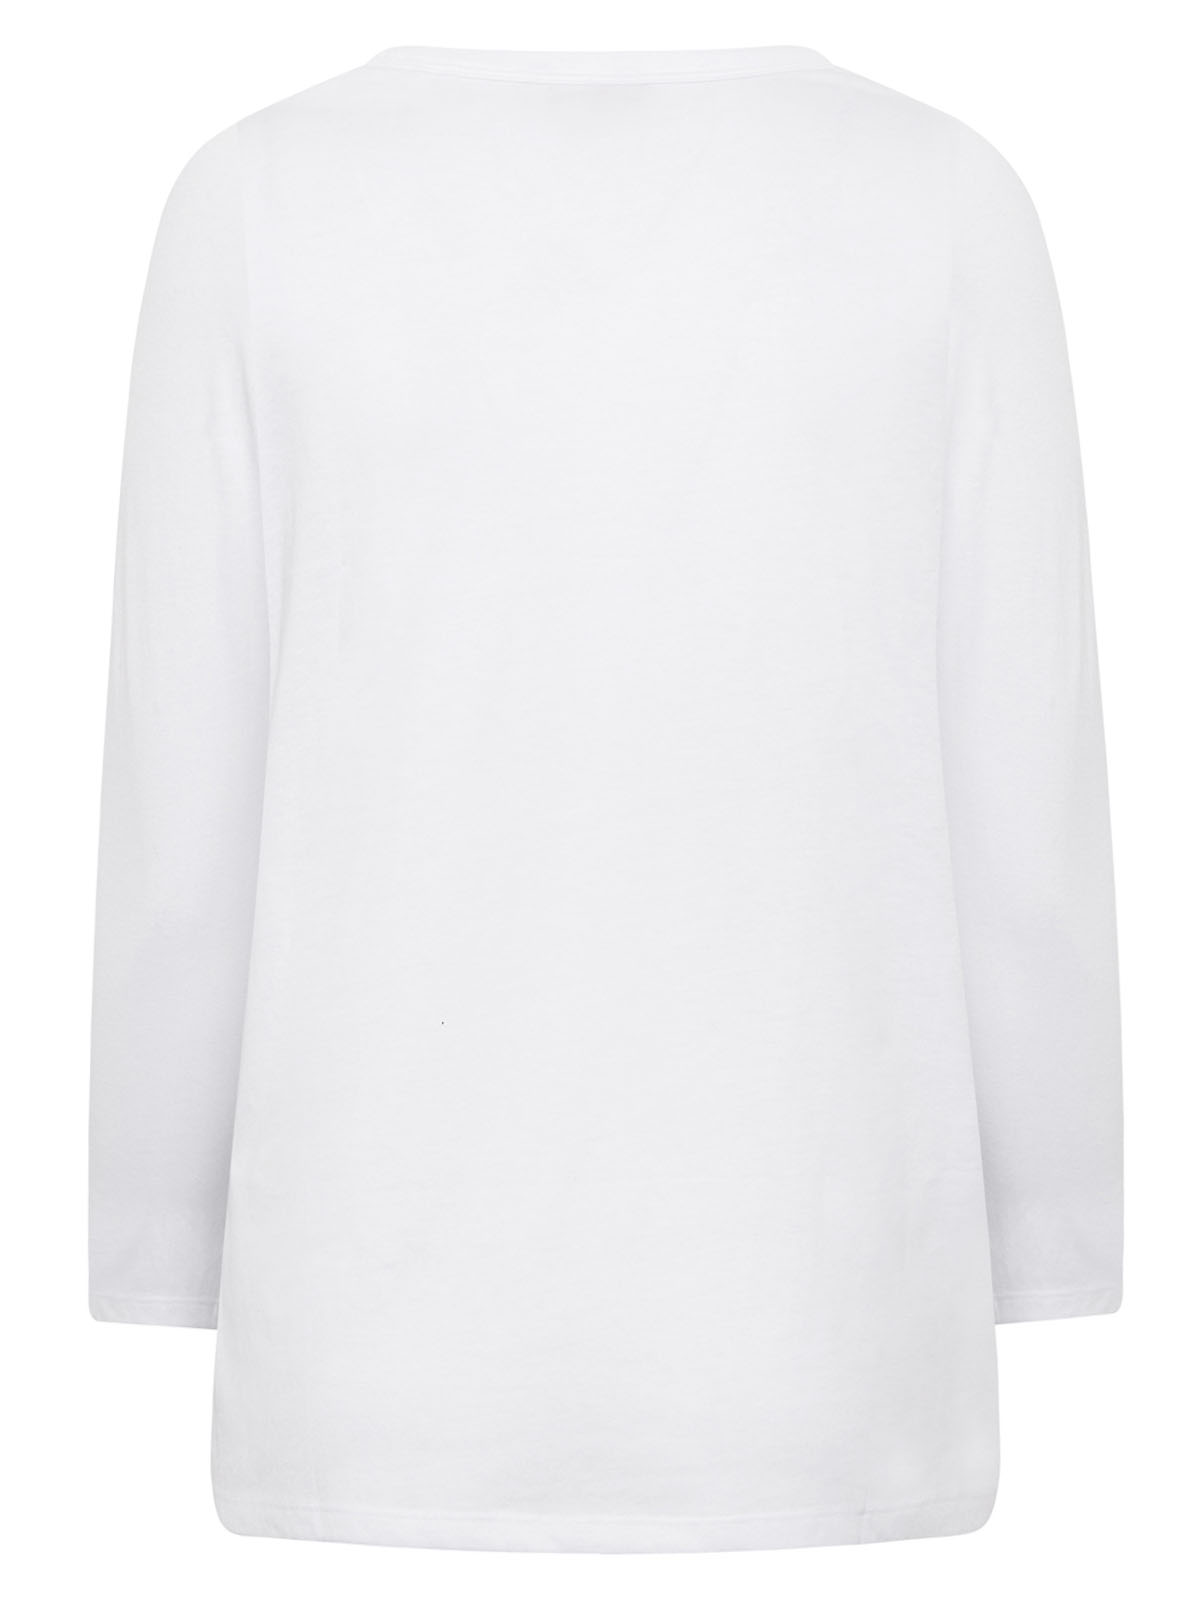 CURVE - - WHITE Cotton Plus Sleeve Rich - Long 14 38/40 to T-Shirt Size